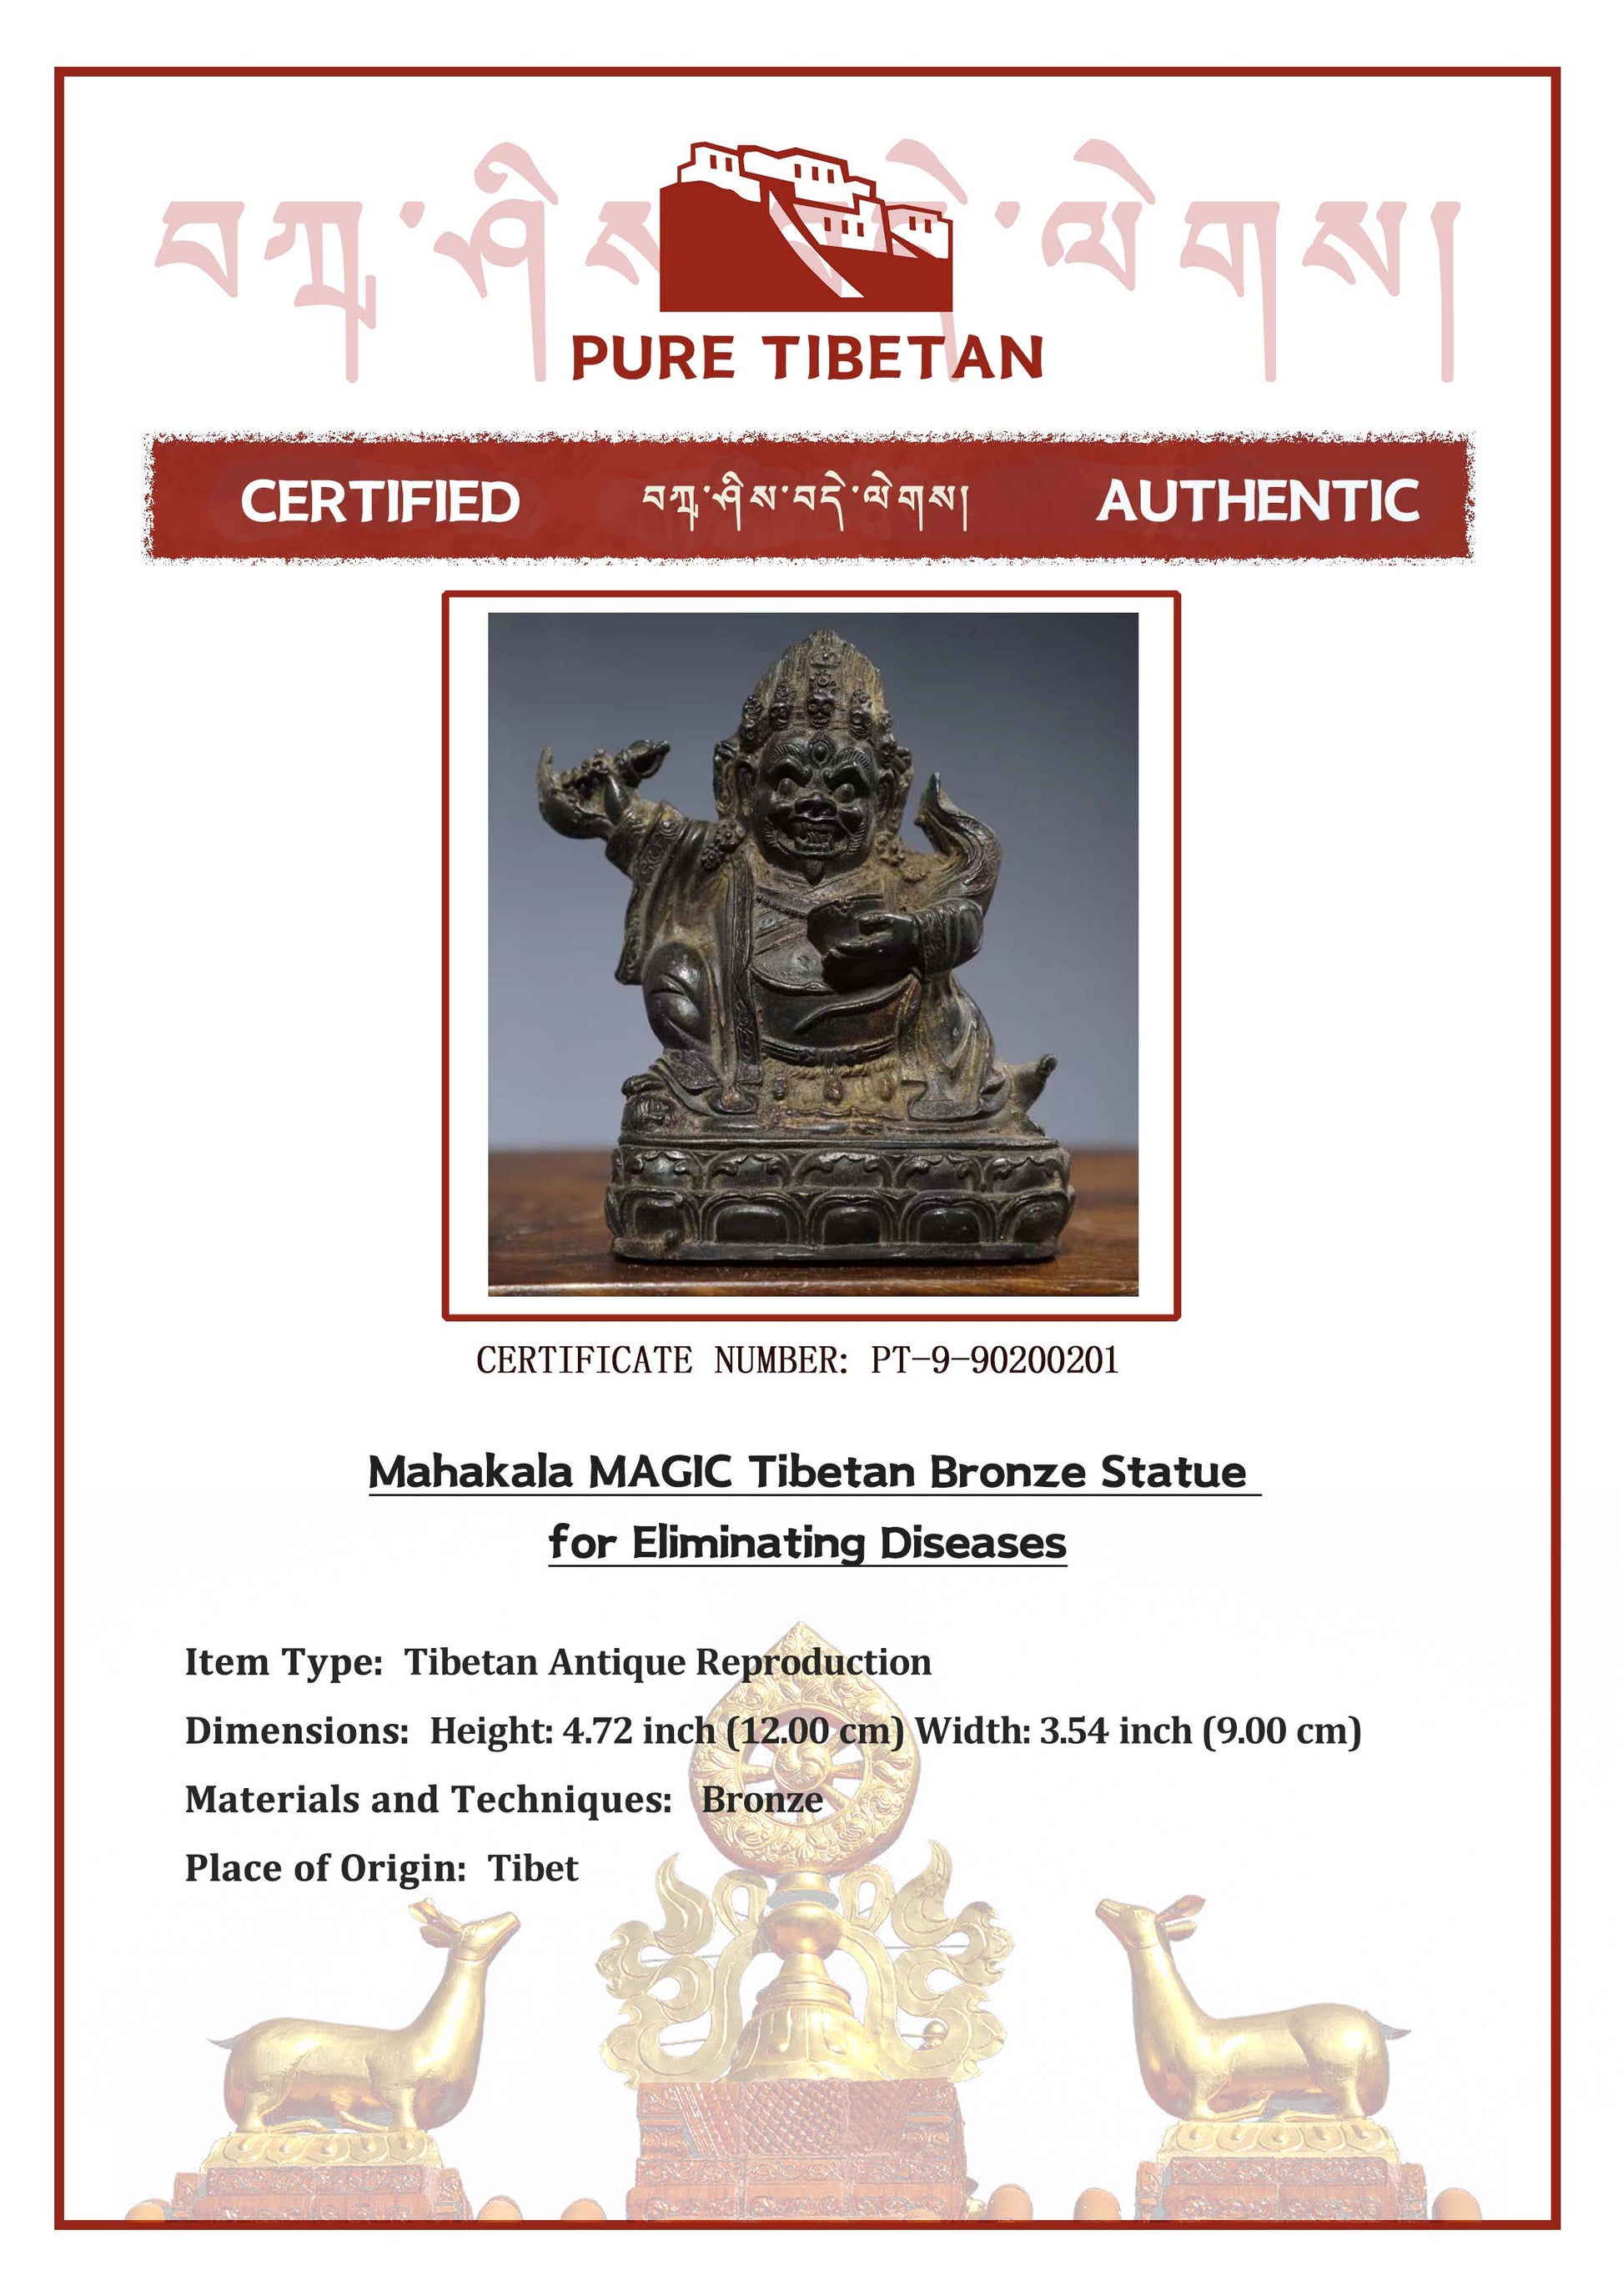 Mahakala MAGIC Tibetan Bronze Statue for Eliminating Diseases puretibetan